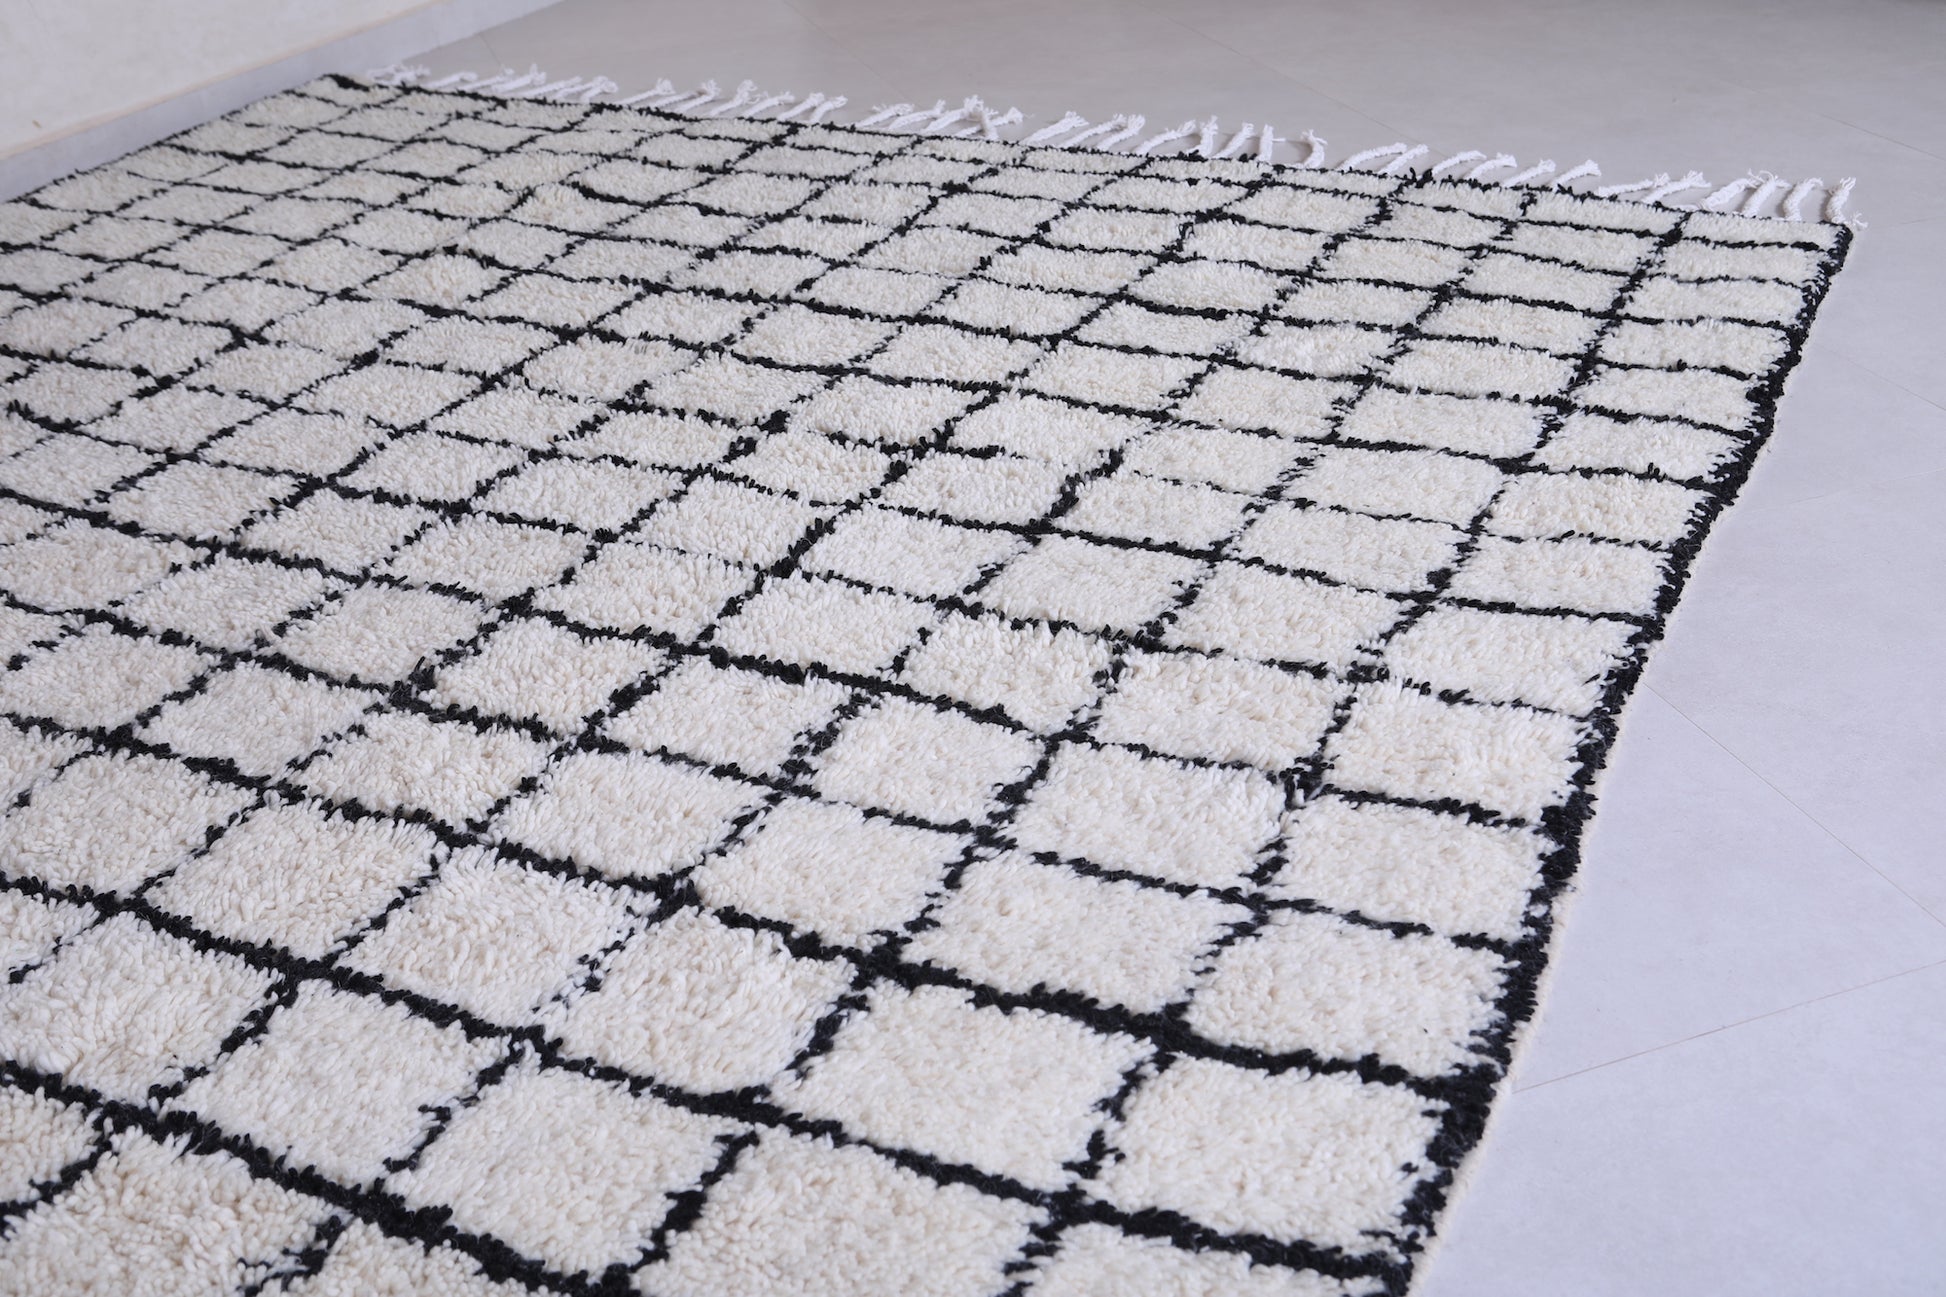 Custom berber area rug - Handmade moroccan plaid carpet